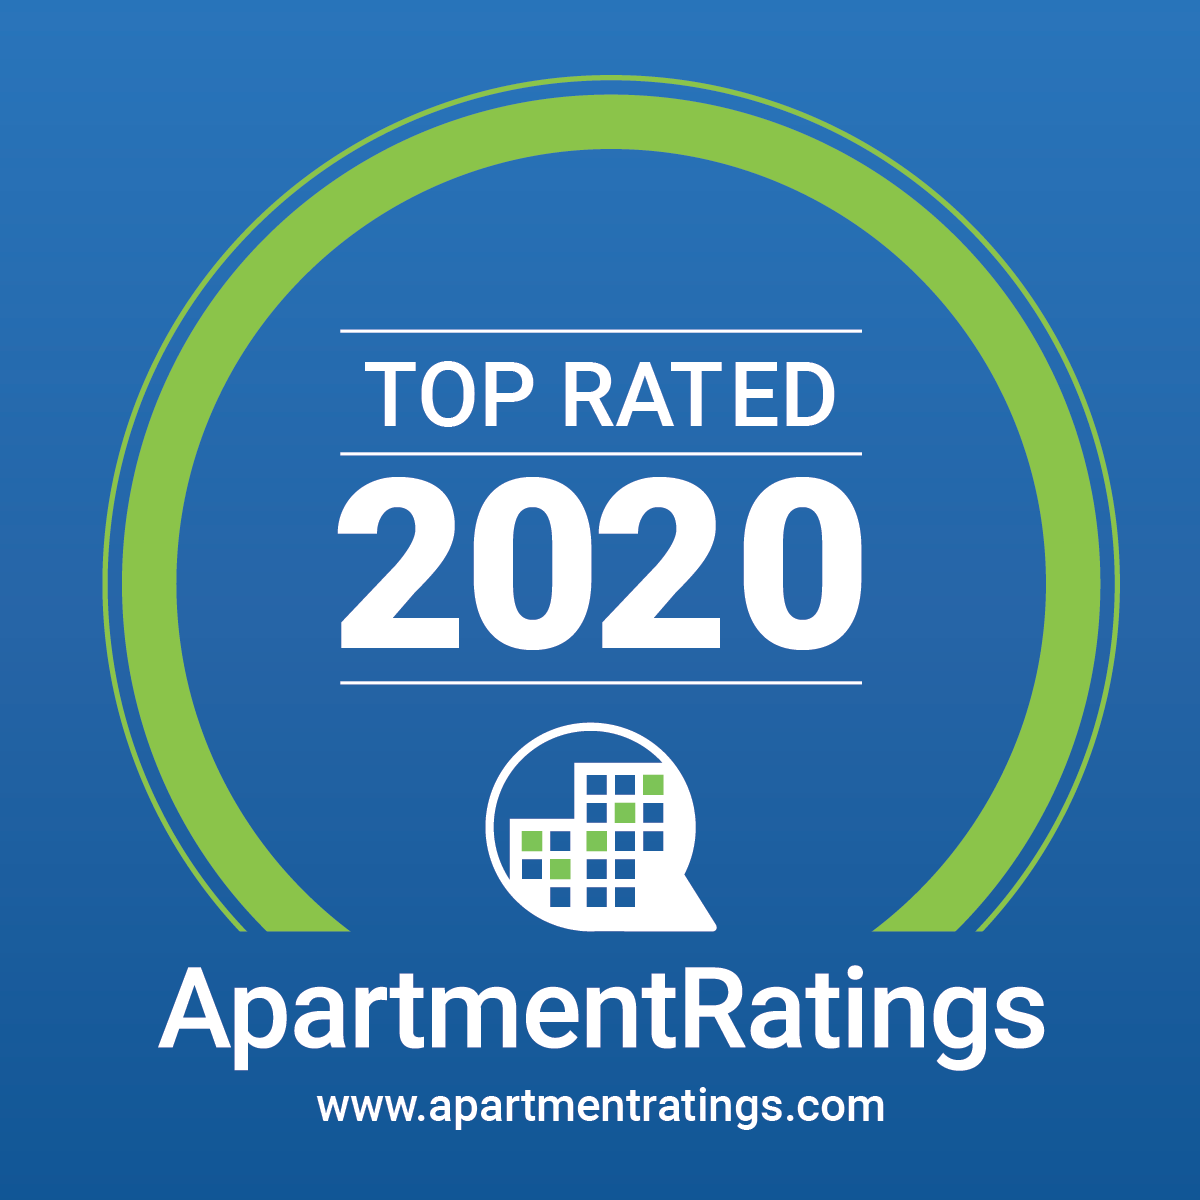 Top Rated 2019 Apartment Ratings award logo